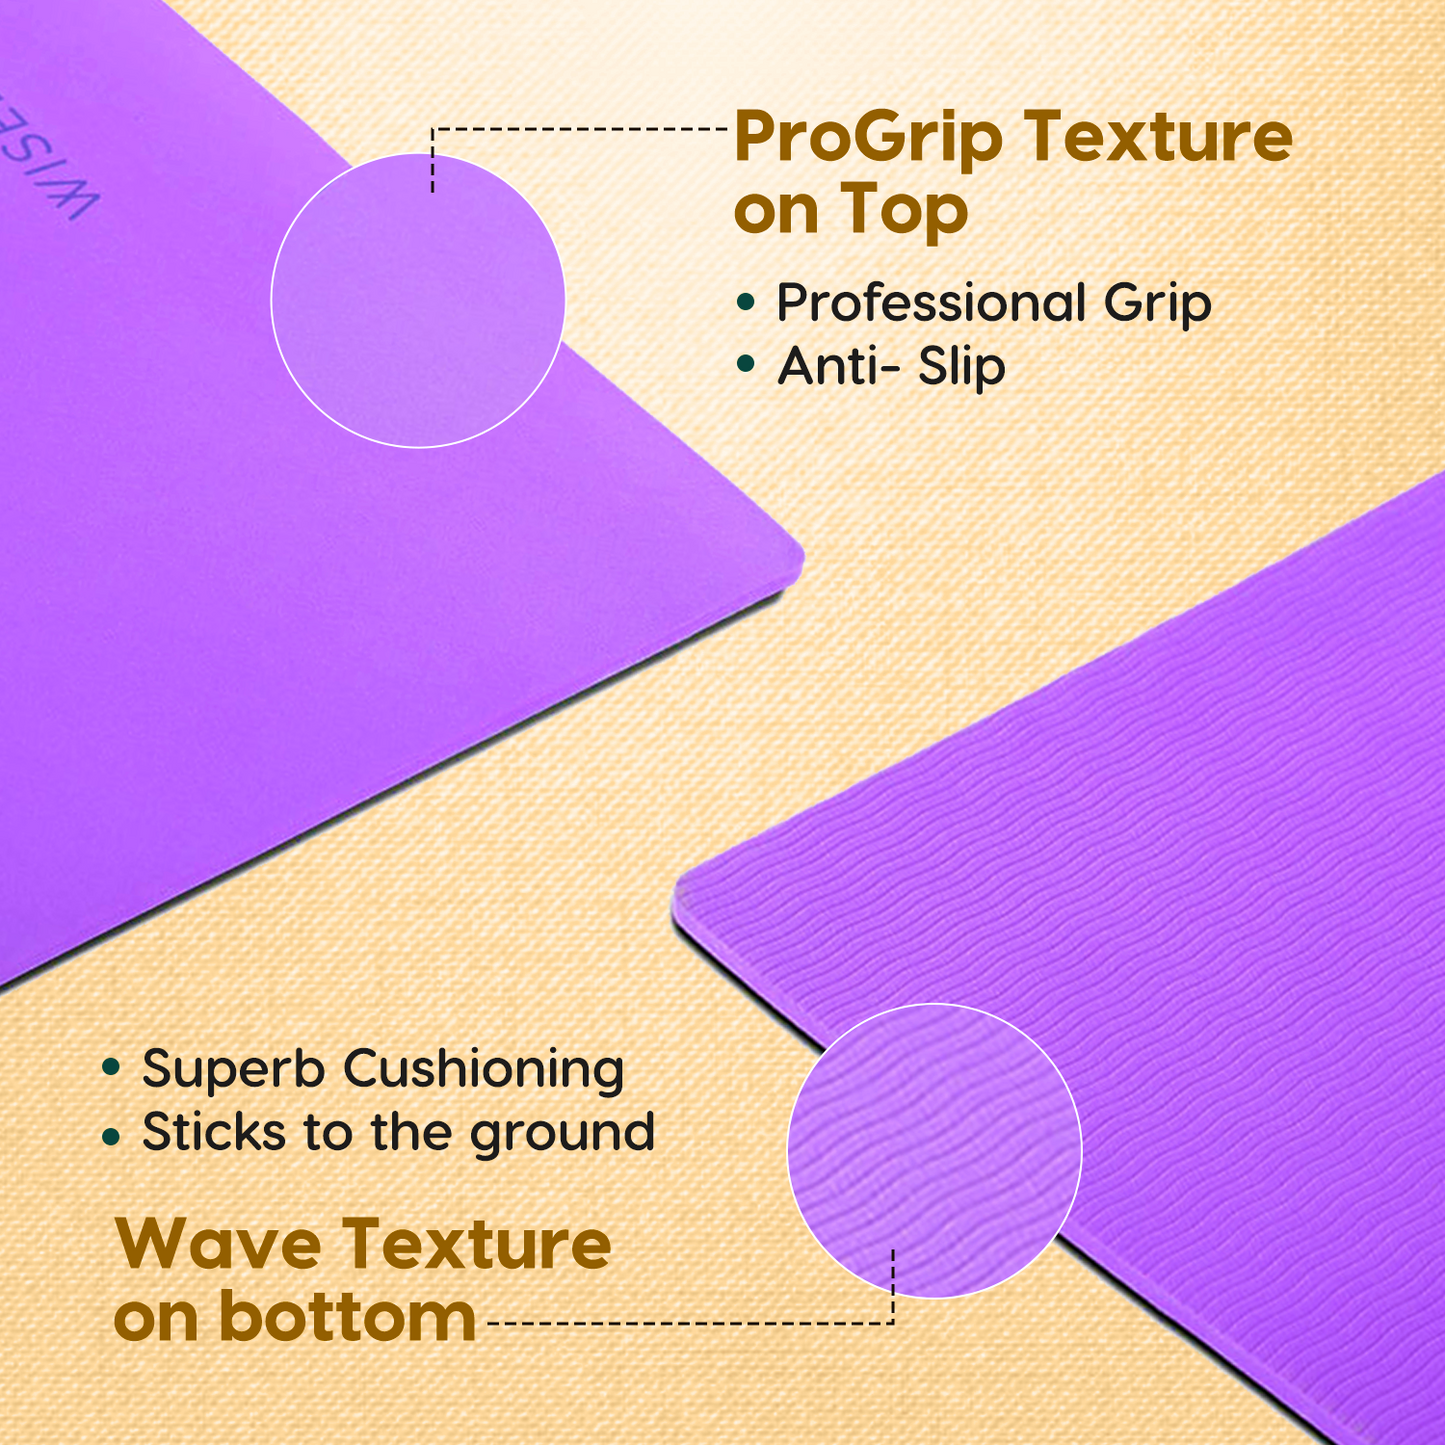 Purpose Printed Yoga Mat - Lilac Purple (6MM)